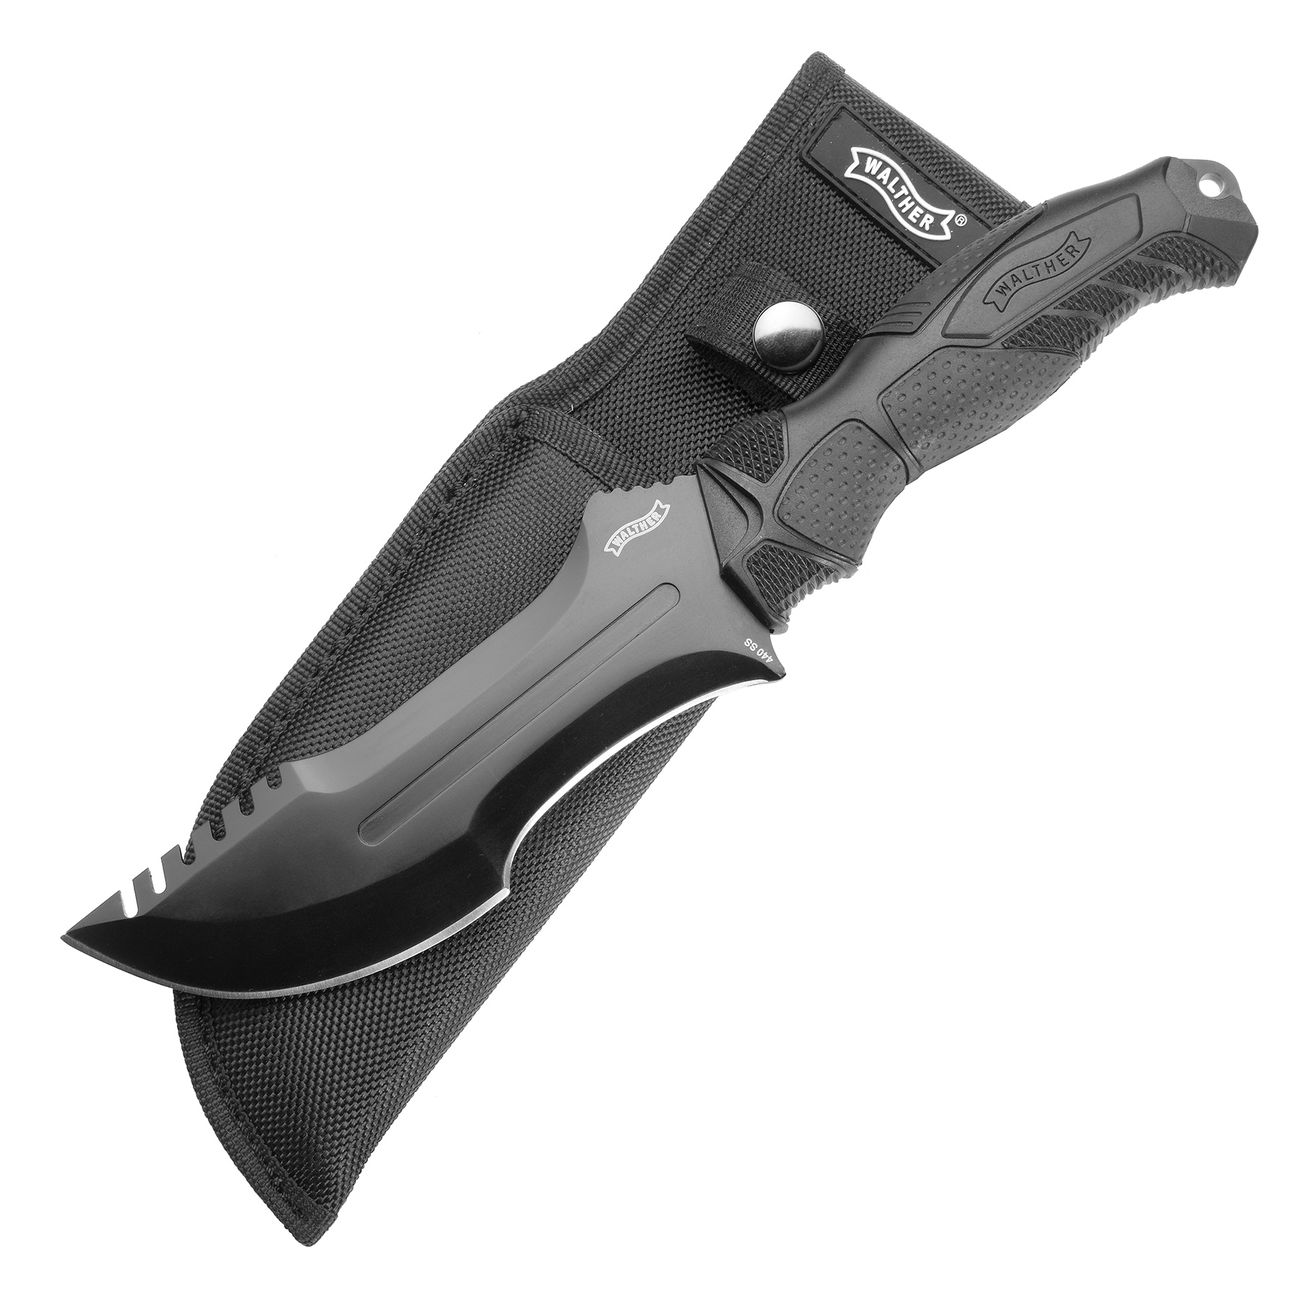 Walther OSK I Outdoormesser Survival Knife mit Nylonscheide Bild 1